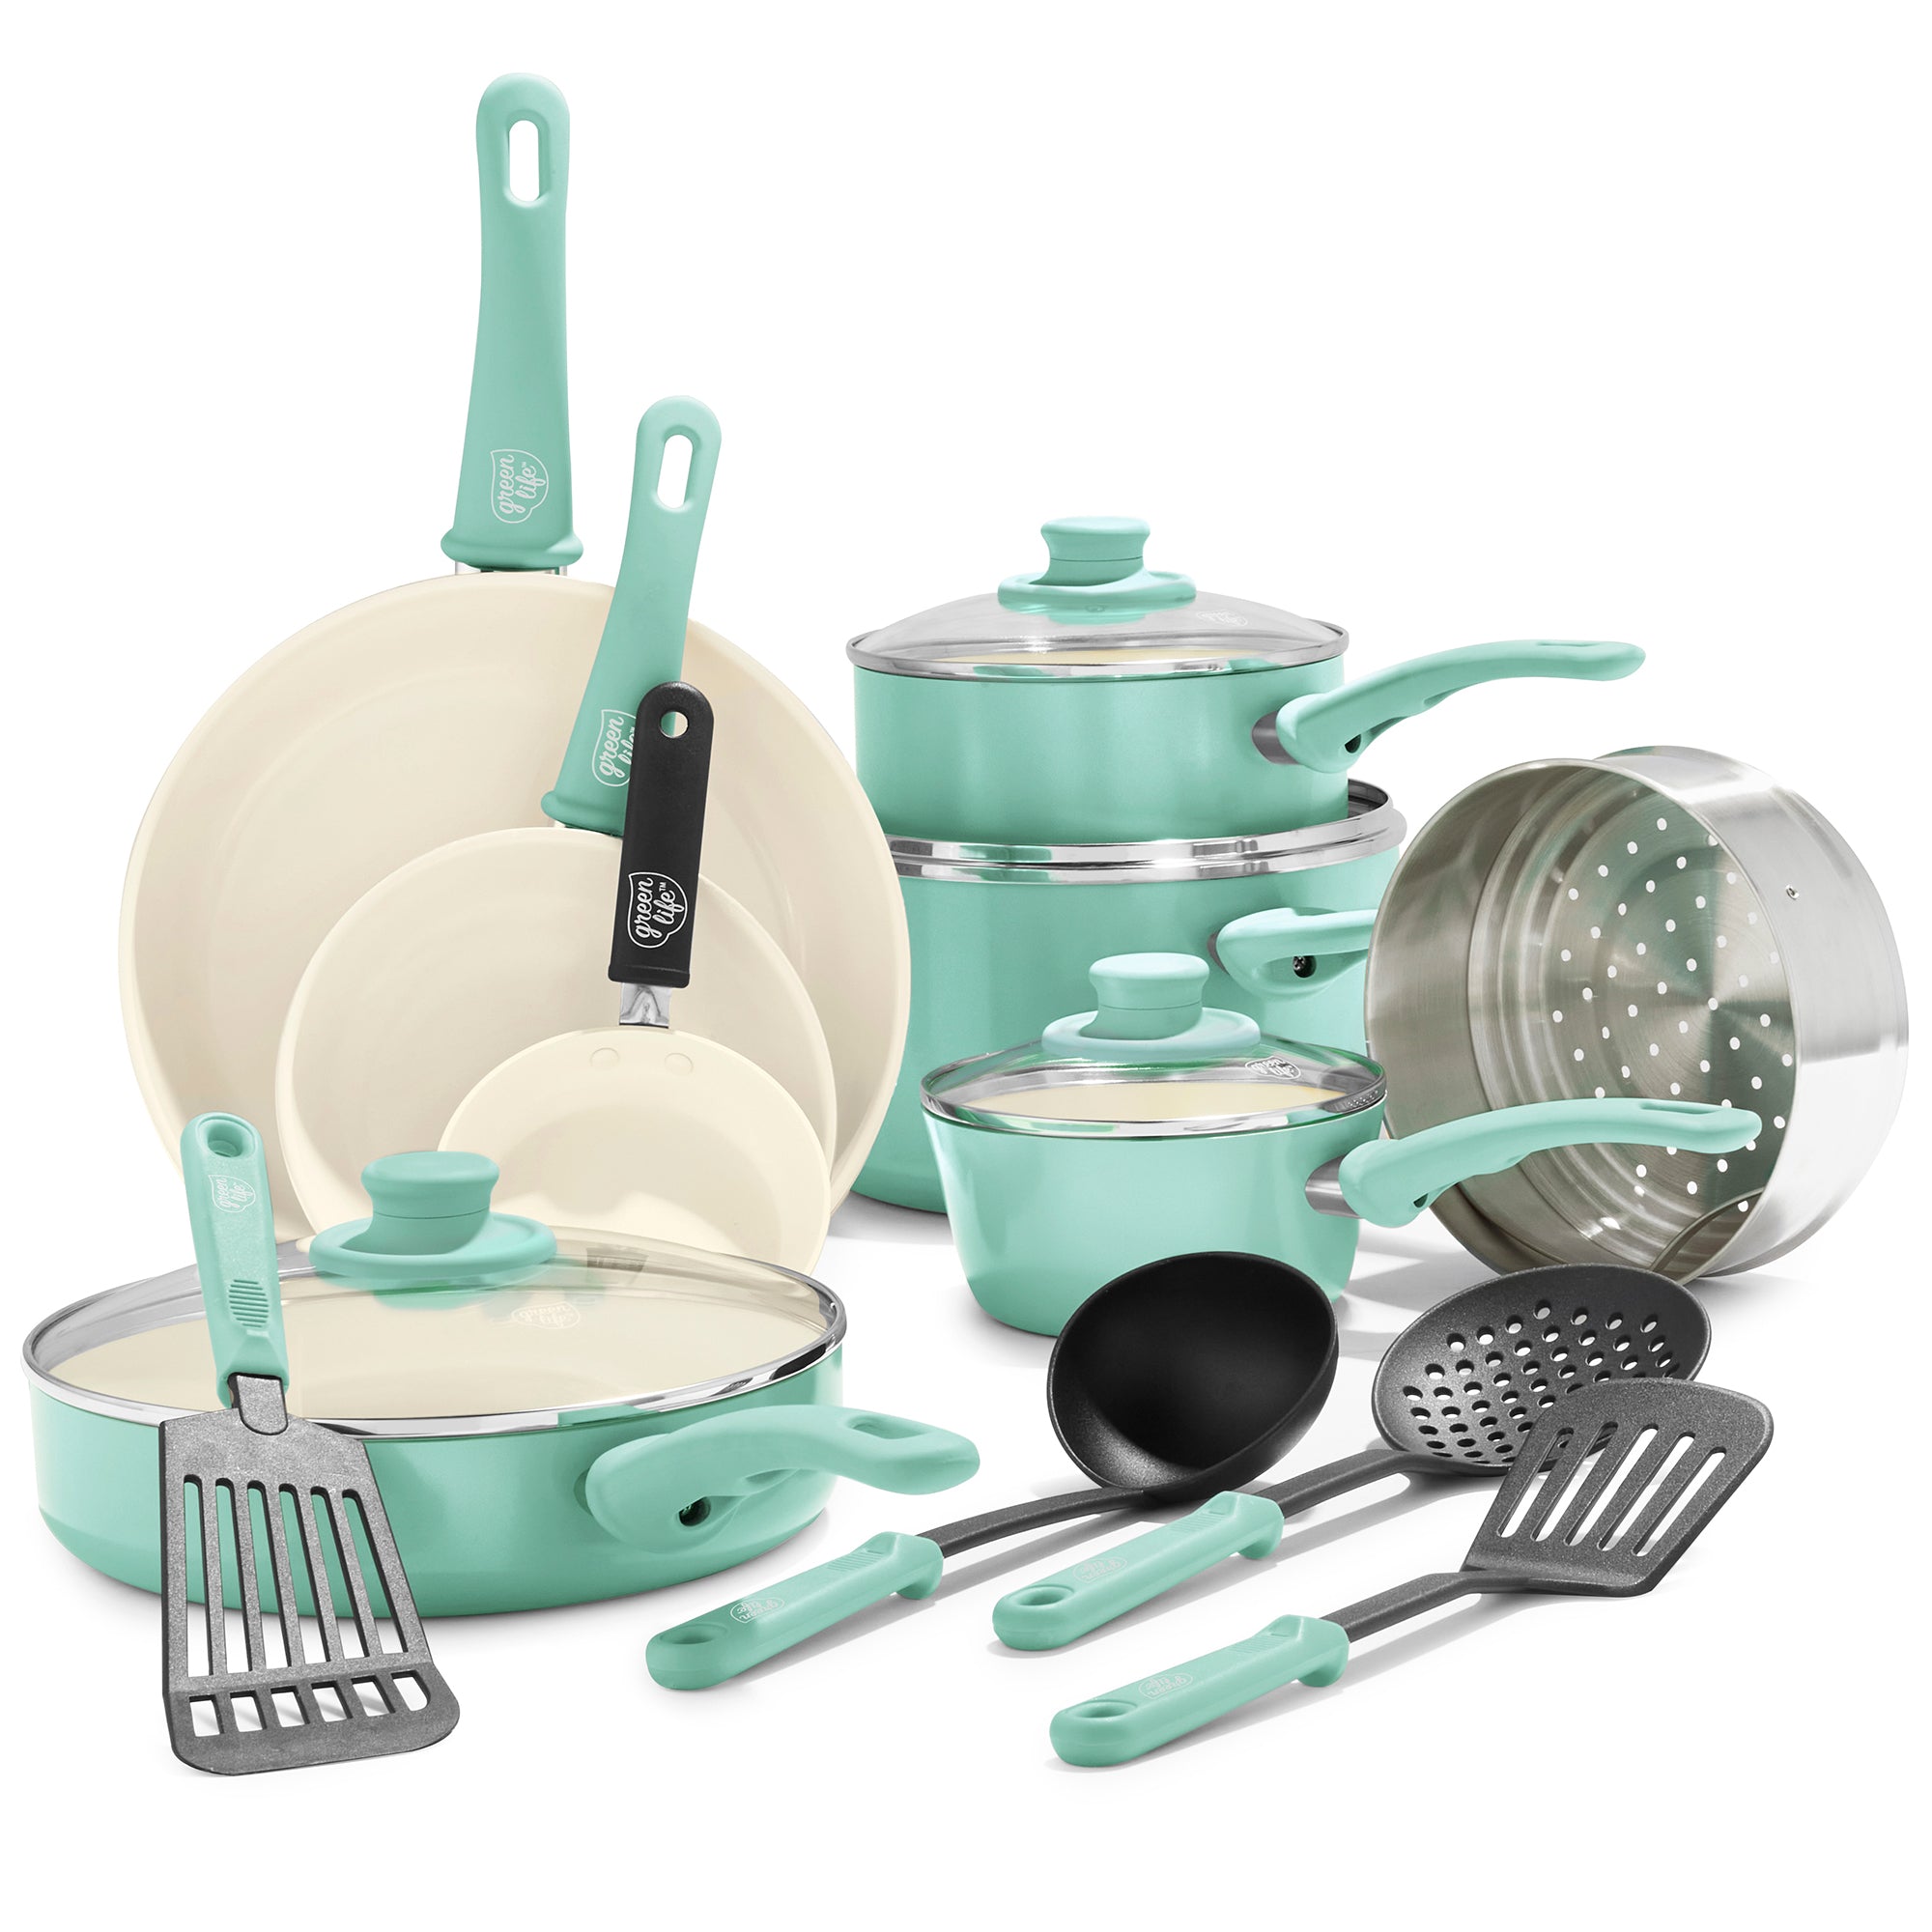 GreenLife Soft Grip Cookware Pots and Pans Set